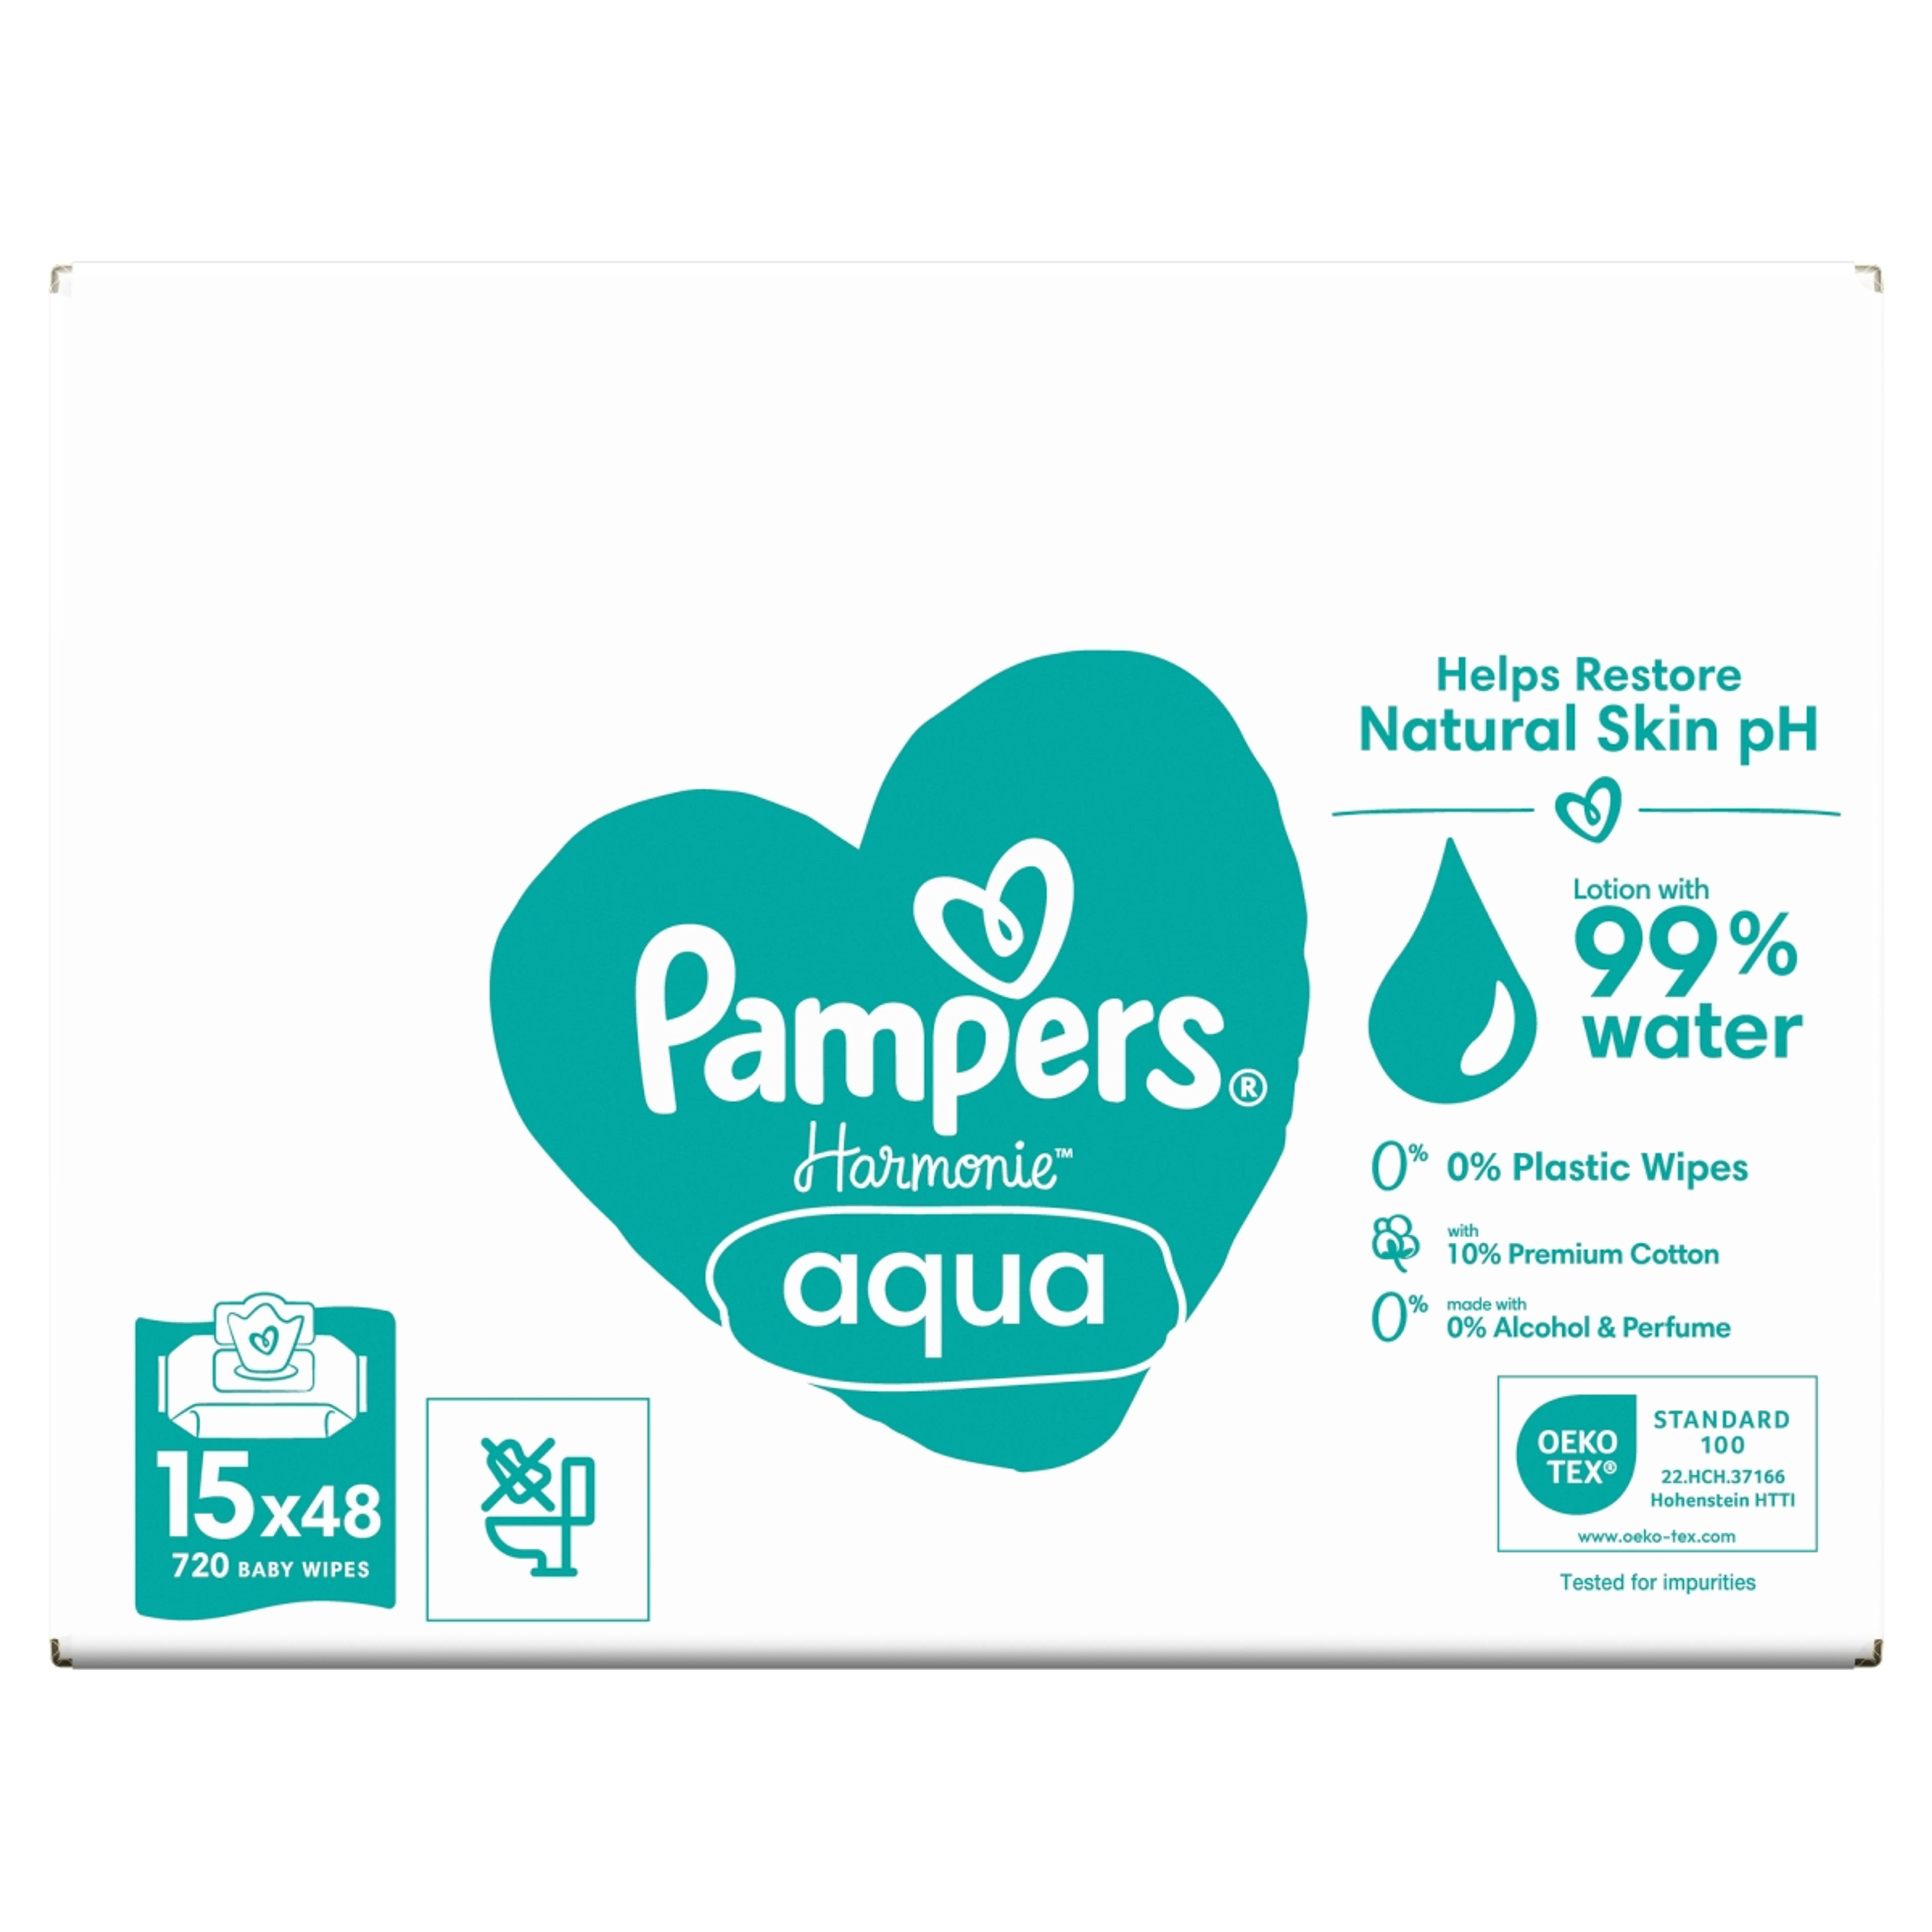 Pampers Harmonie Aqua nedves törlőkendő, 15 csomag - 720 db